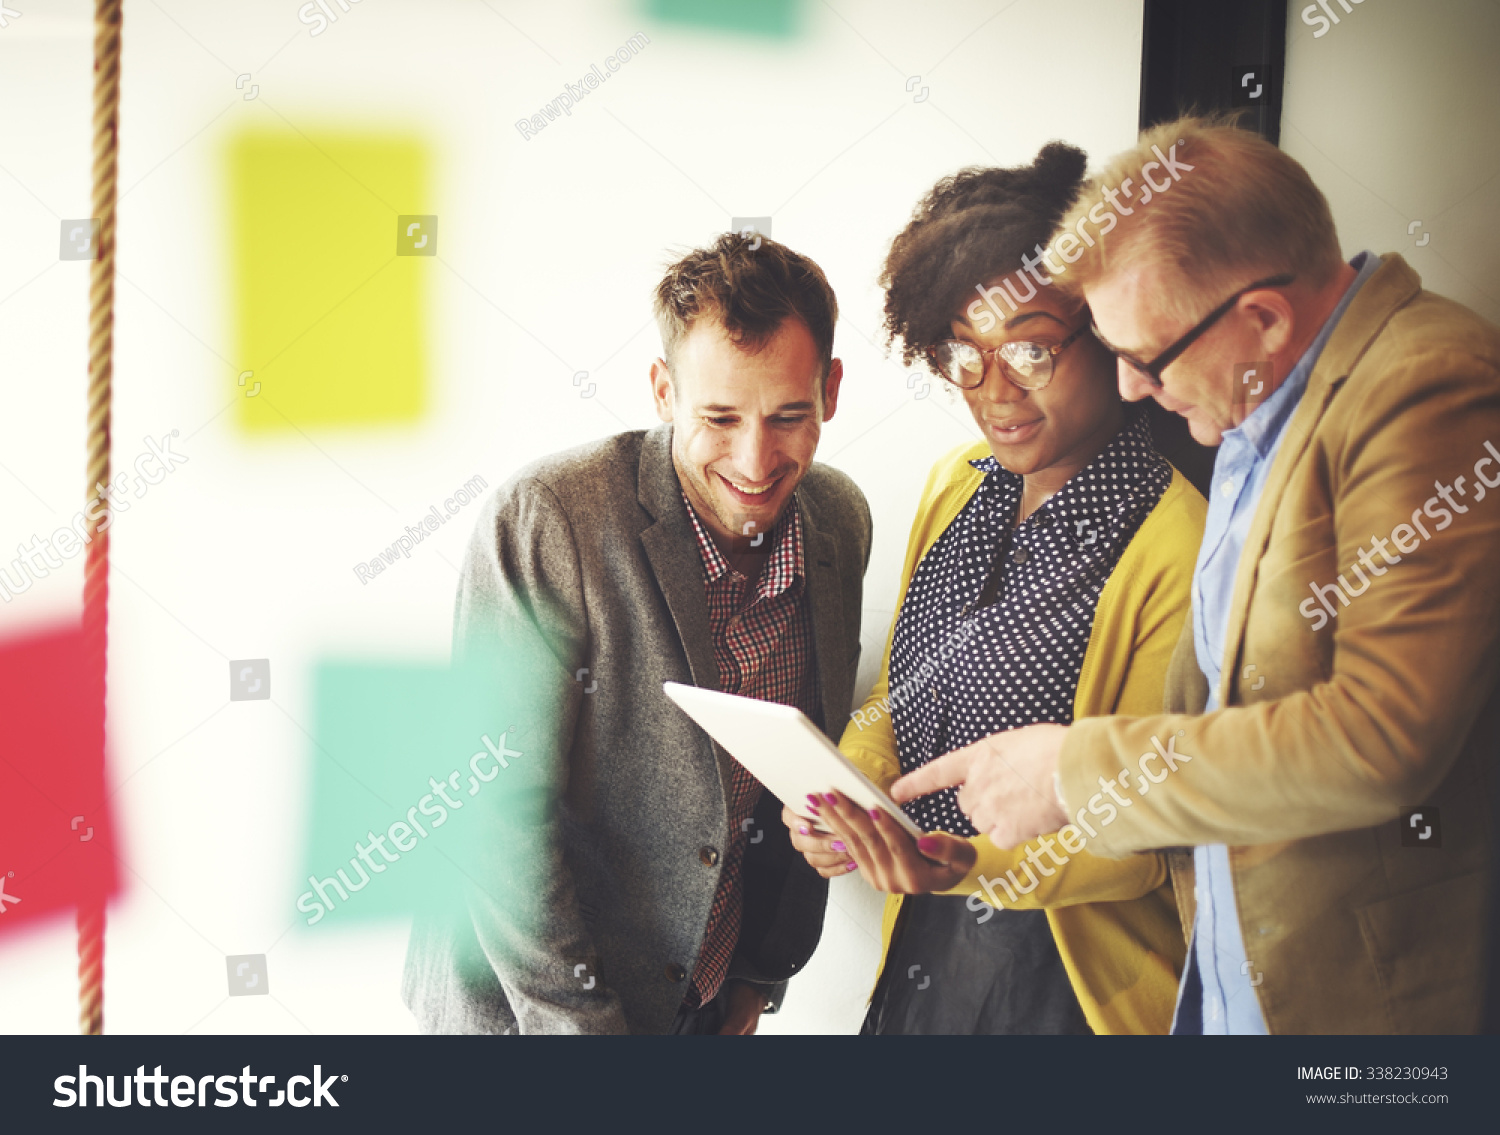 Business Team Meeting Discussion Break Concept #338230943